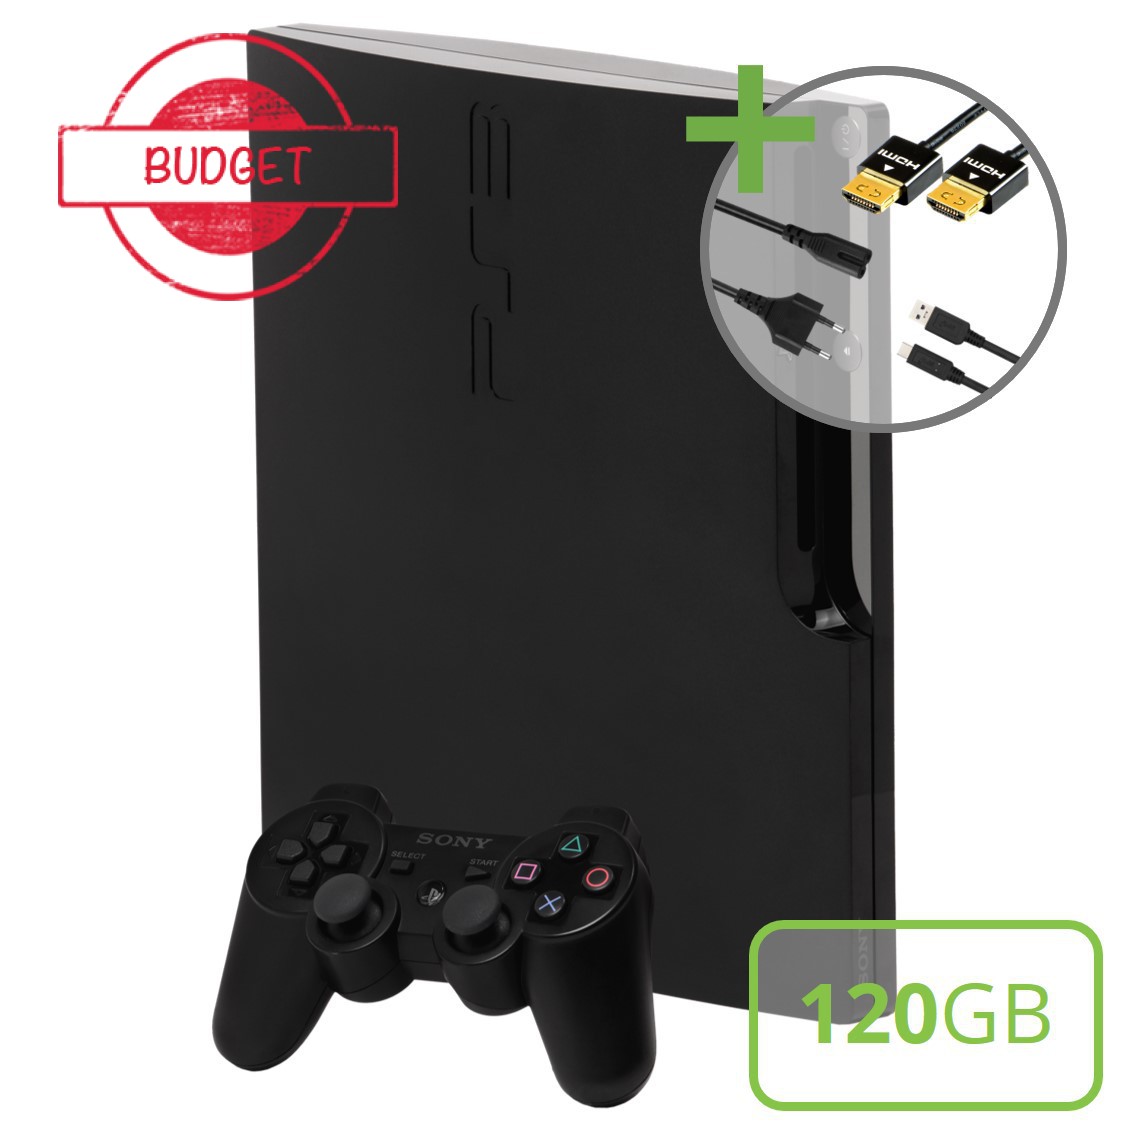 Sony PlayStation 3 Slim (120GB) Starter Pack - DualShock Edition - Budget - Playstation 3 Hardware - 2